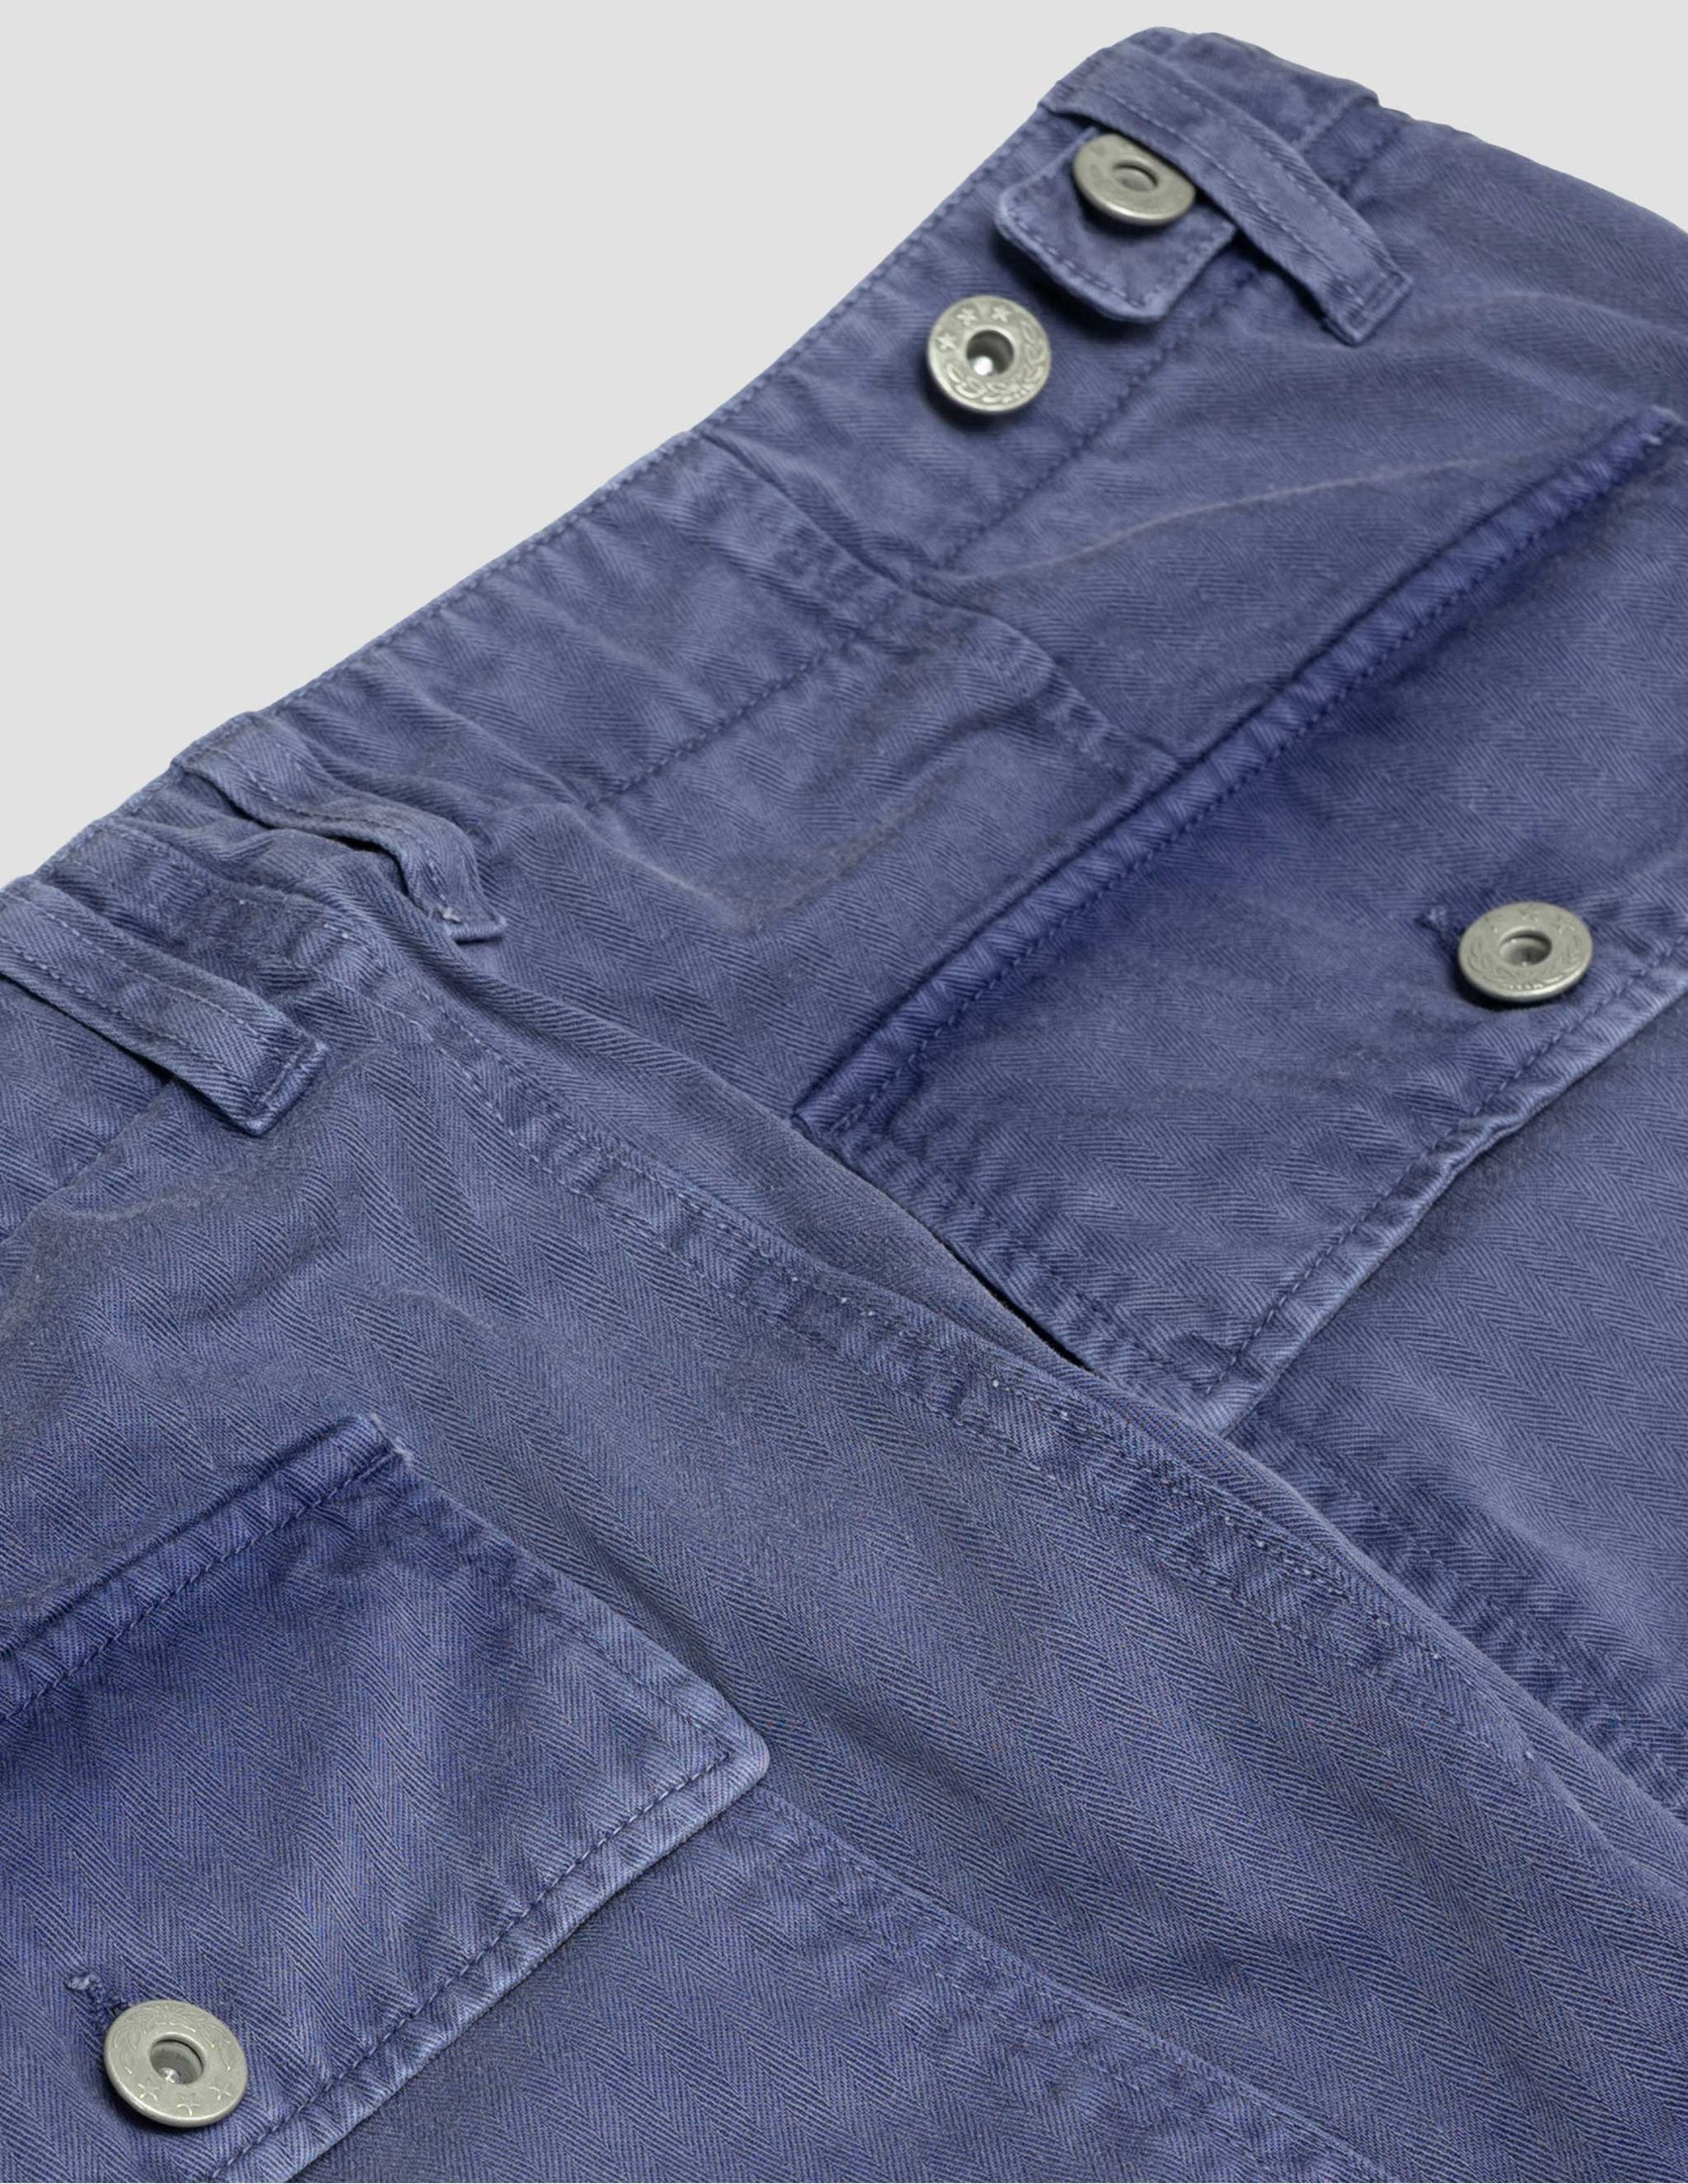 Series II Garment Dyed Utility Pant in Indigo Dye